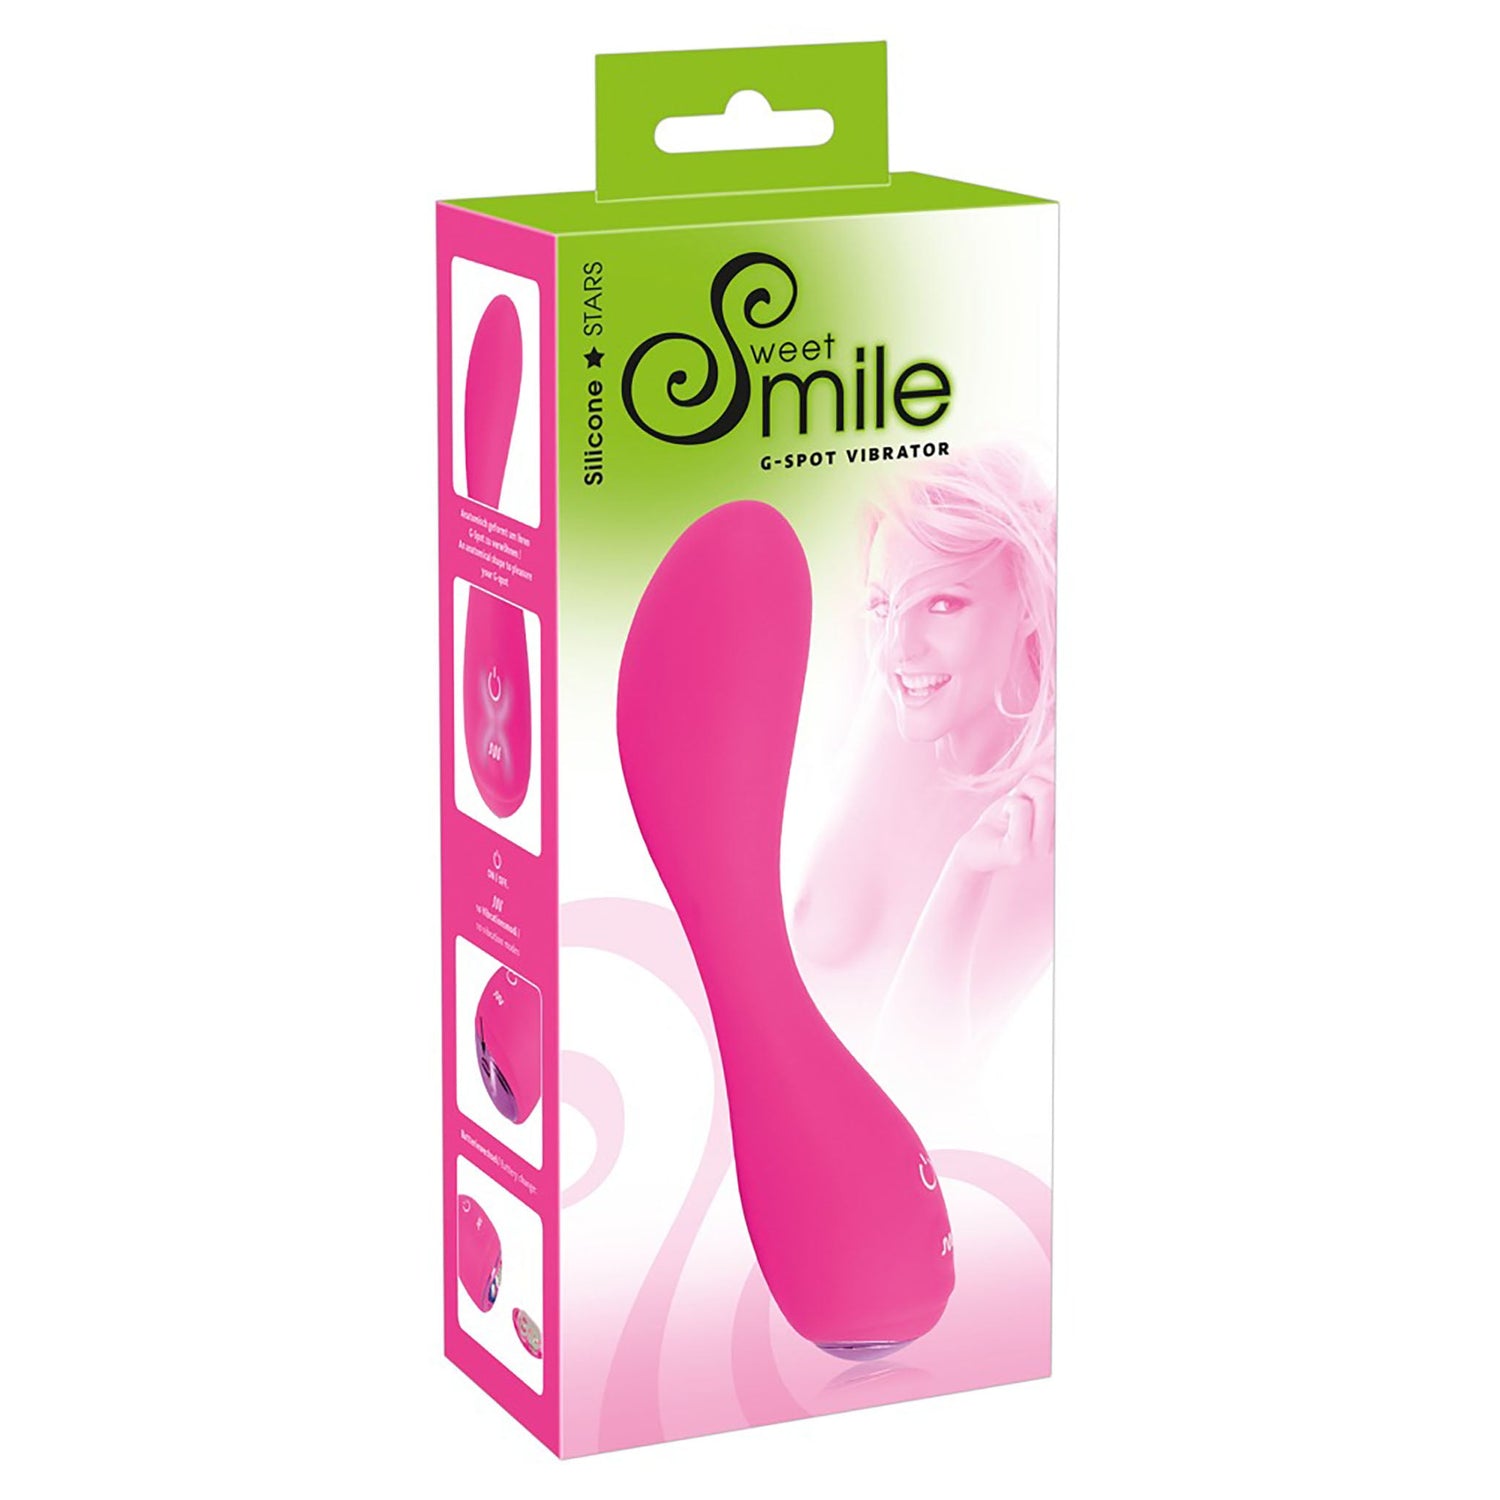 G-Spot Vibrator in pink von Sweet Smile, verpackung